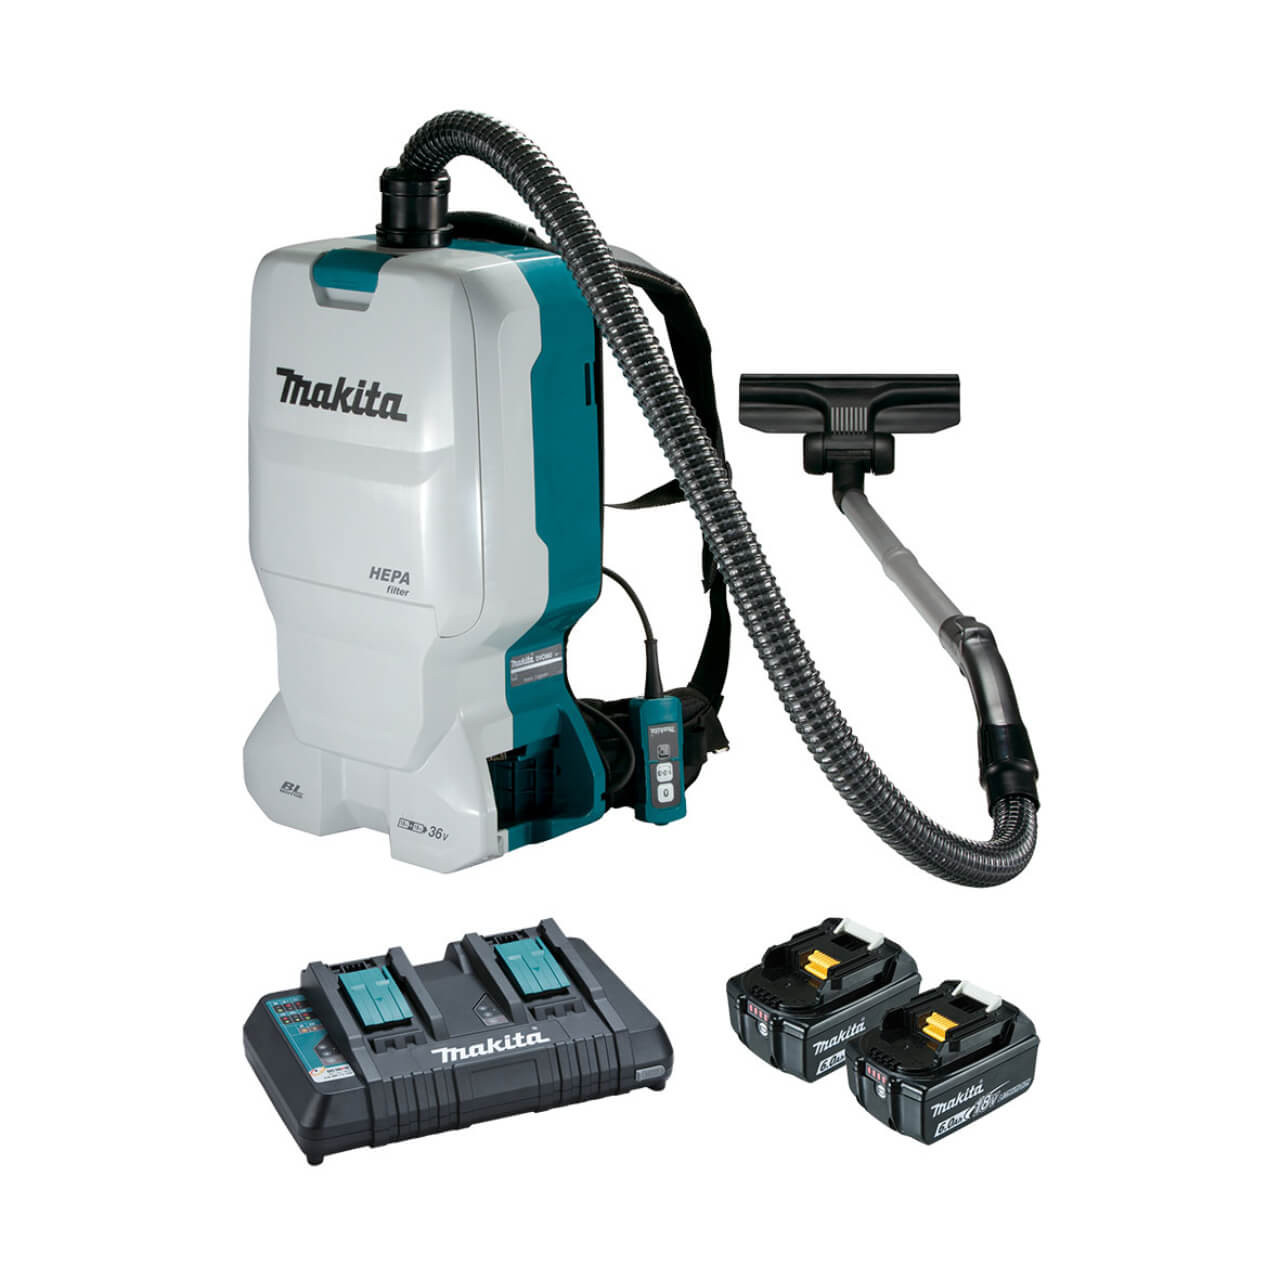 Makita 18Vx2 BRUSHLESS Backpack Vacuum Kit. 6L Tank Capacity - Includes 2 x 6.0Ah Batteries. Dual Port Rapid Charger